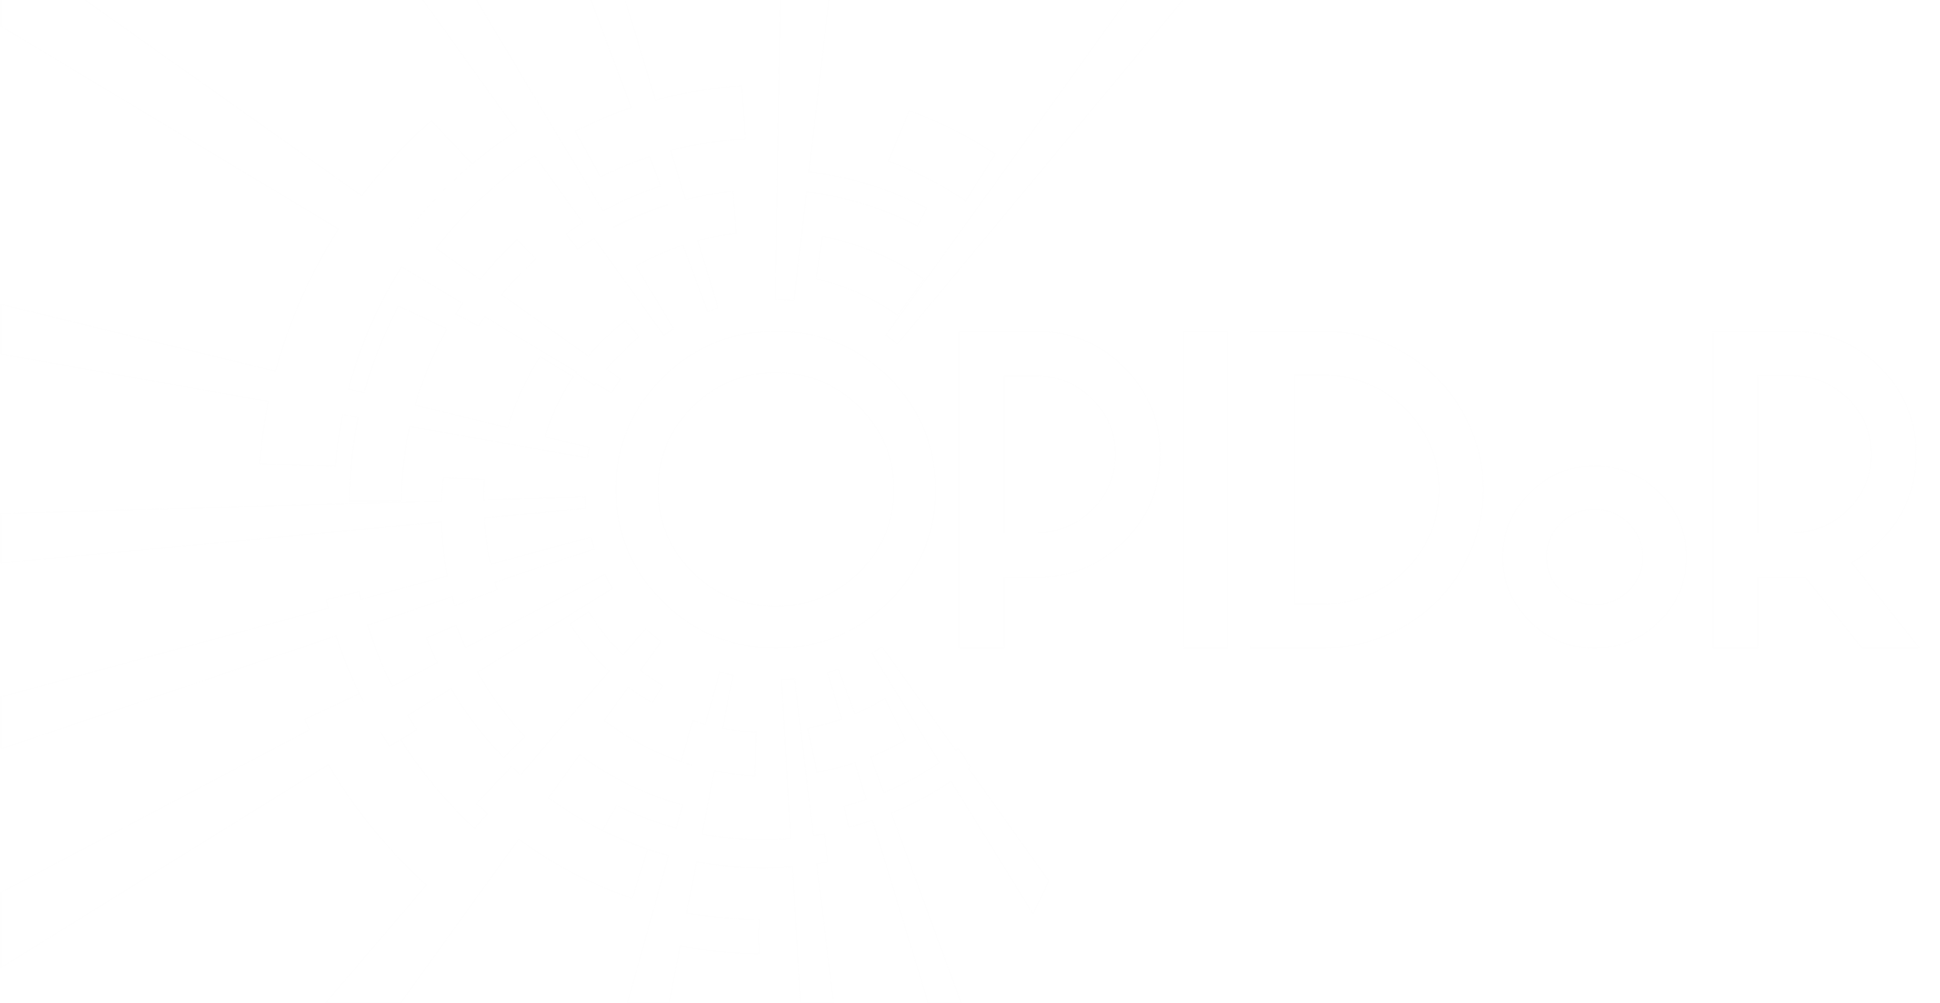 OPIDoR logo (opens in a new window)